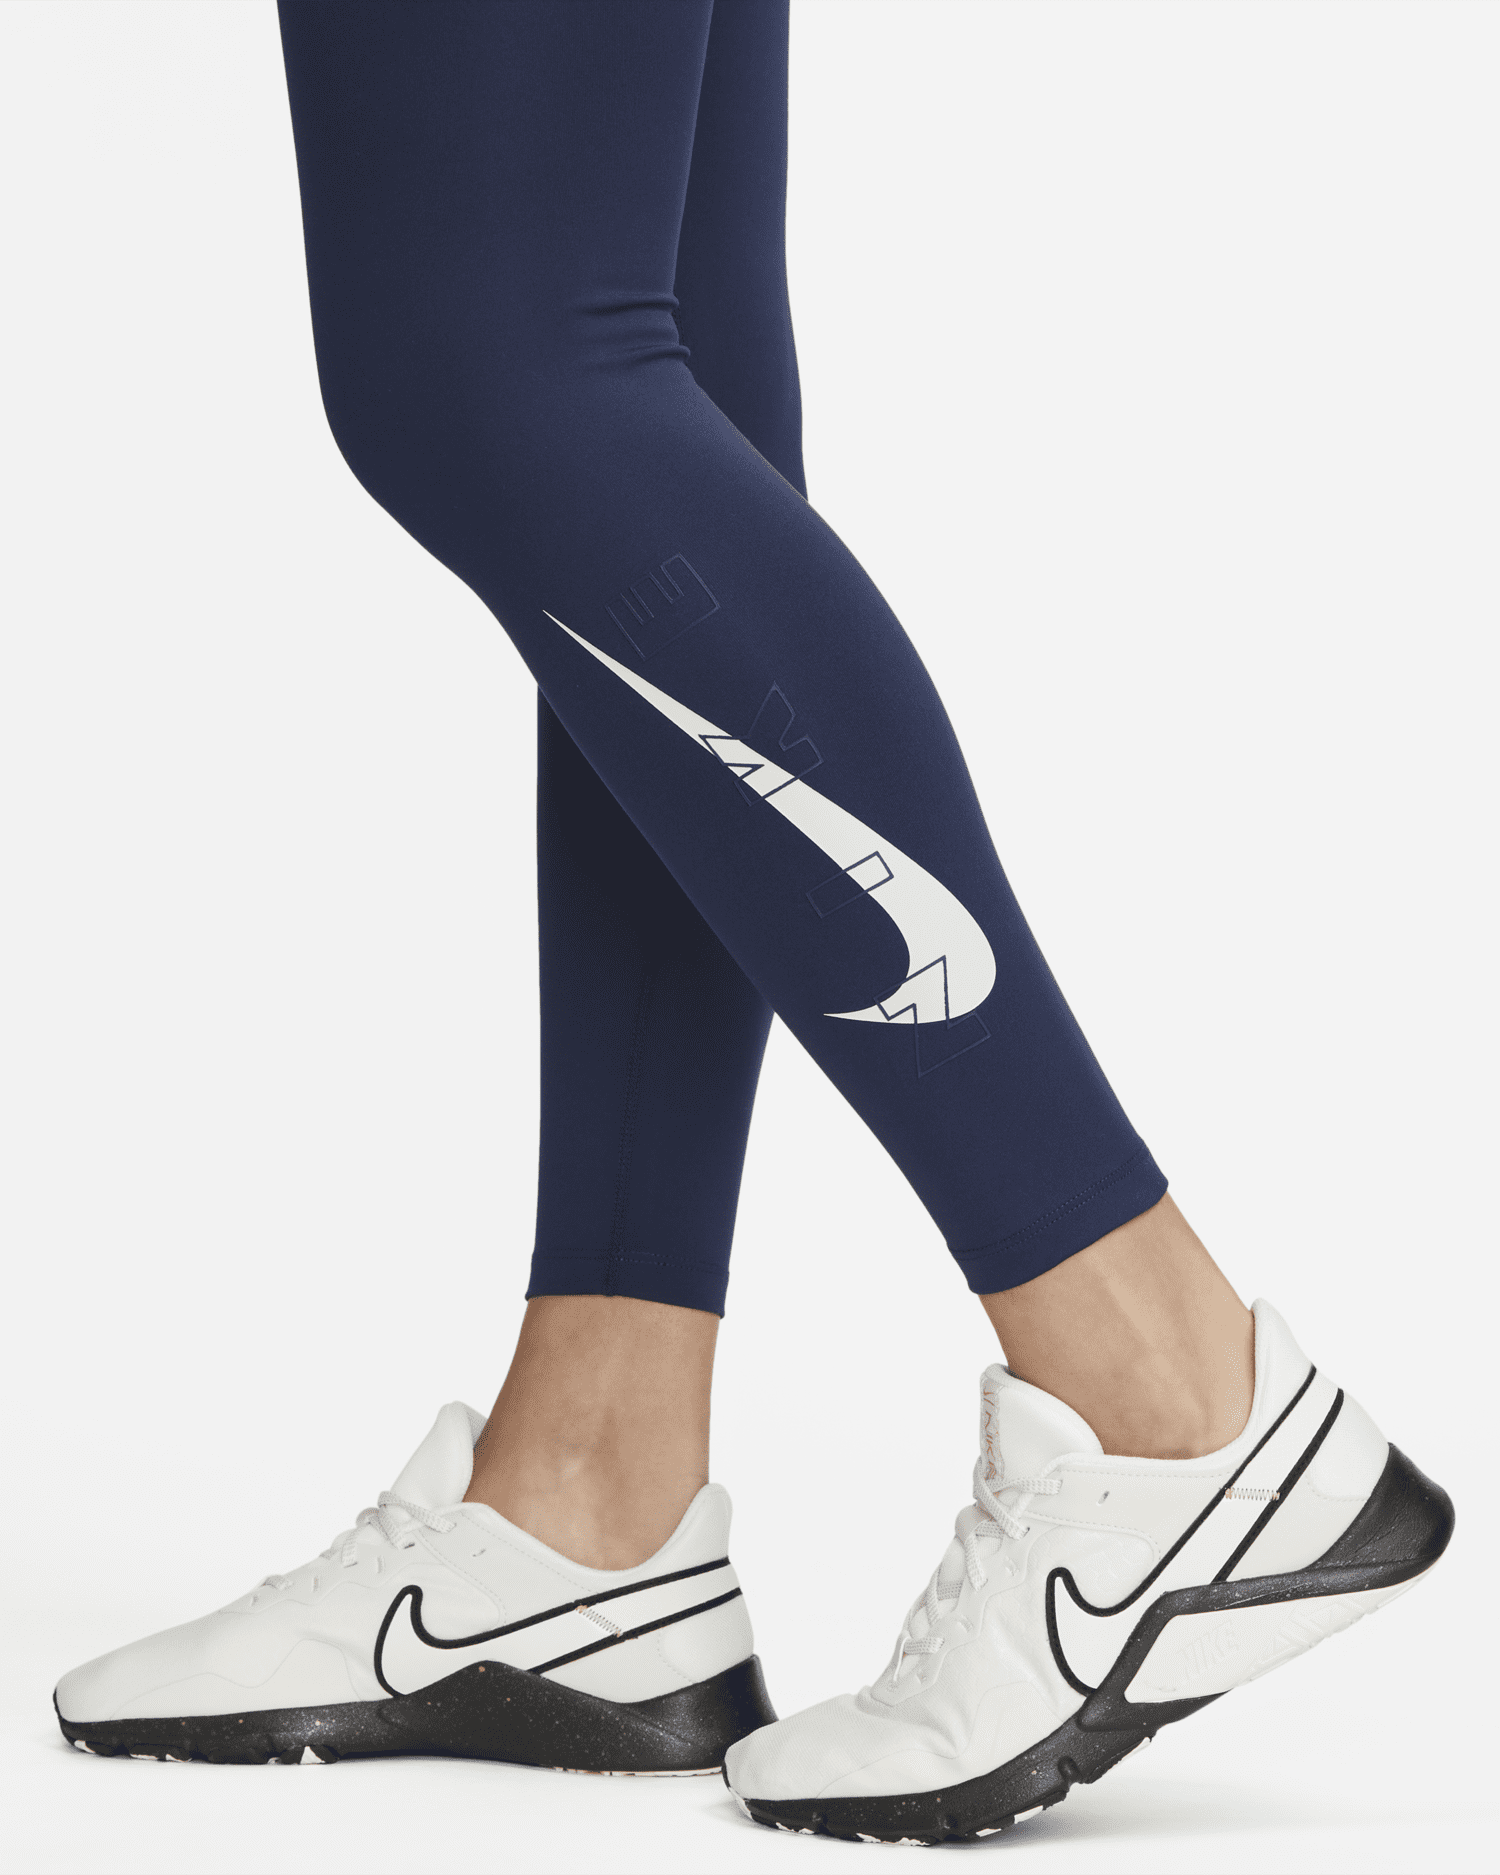 Nike Training One Dri-Fit mid rise 7/8 leggings in jungle green